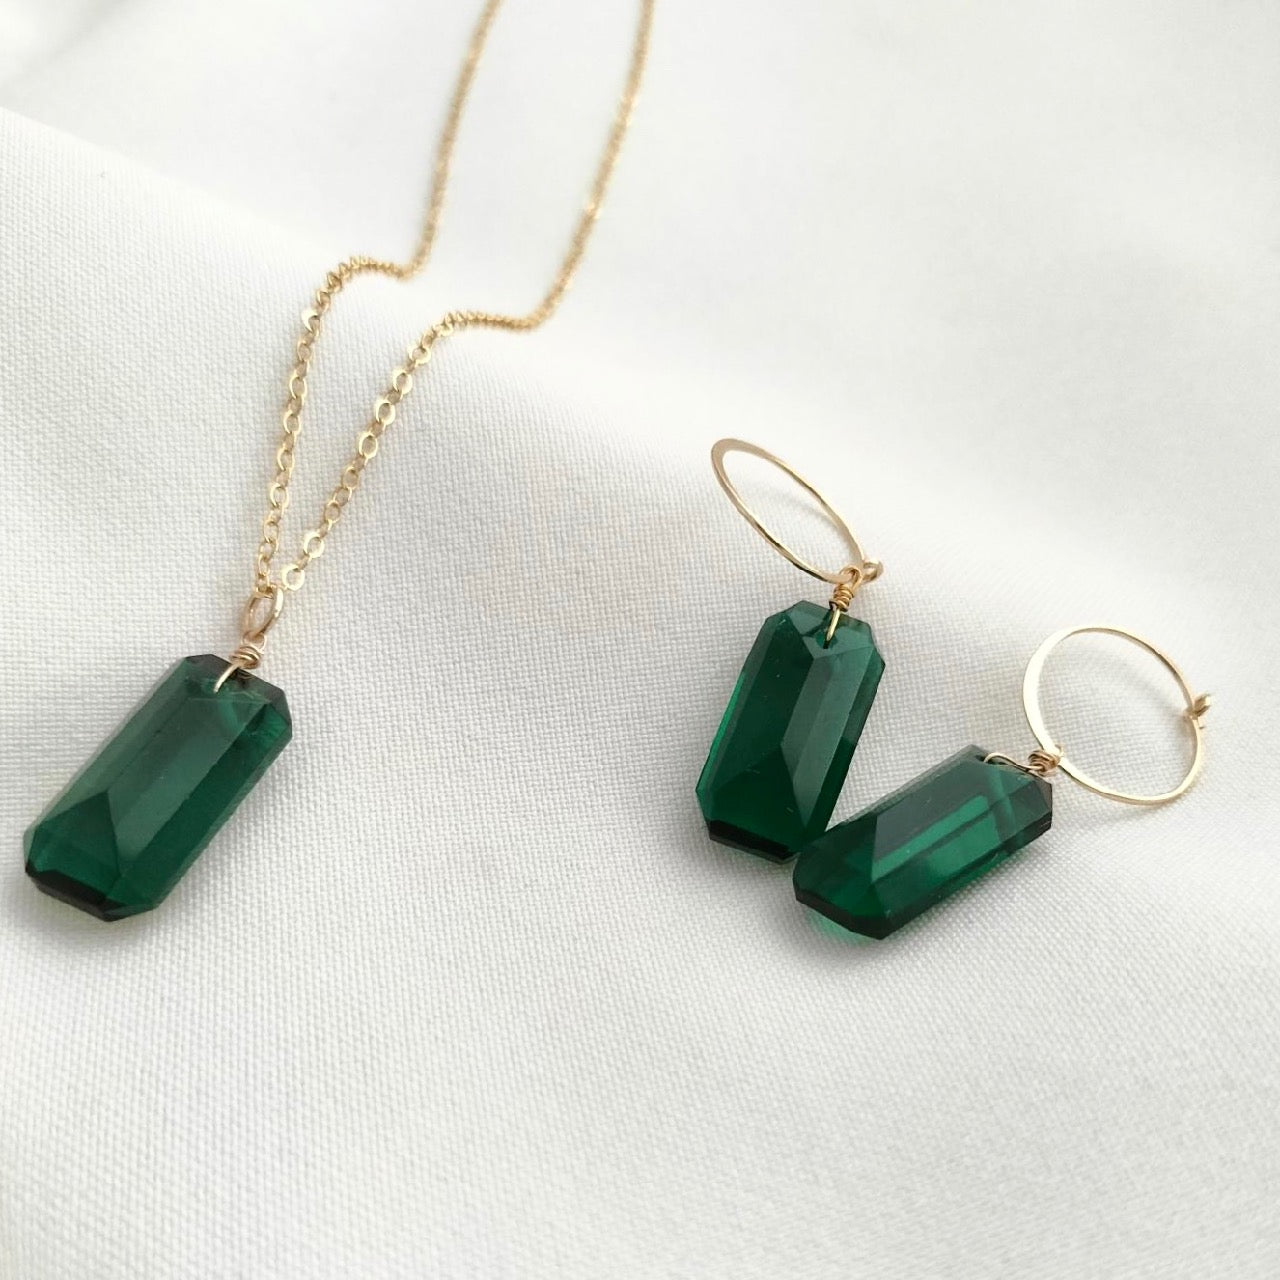 Green emerald quartz jewellery